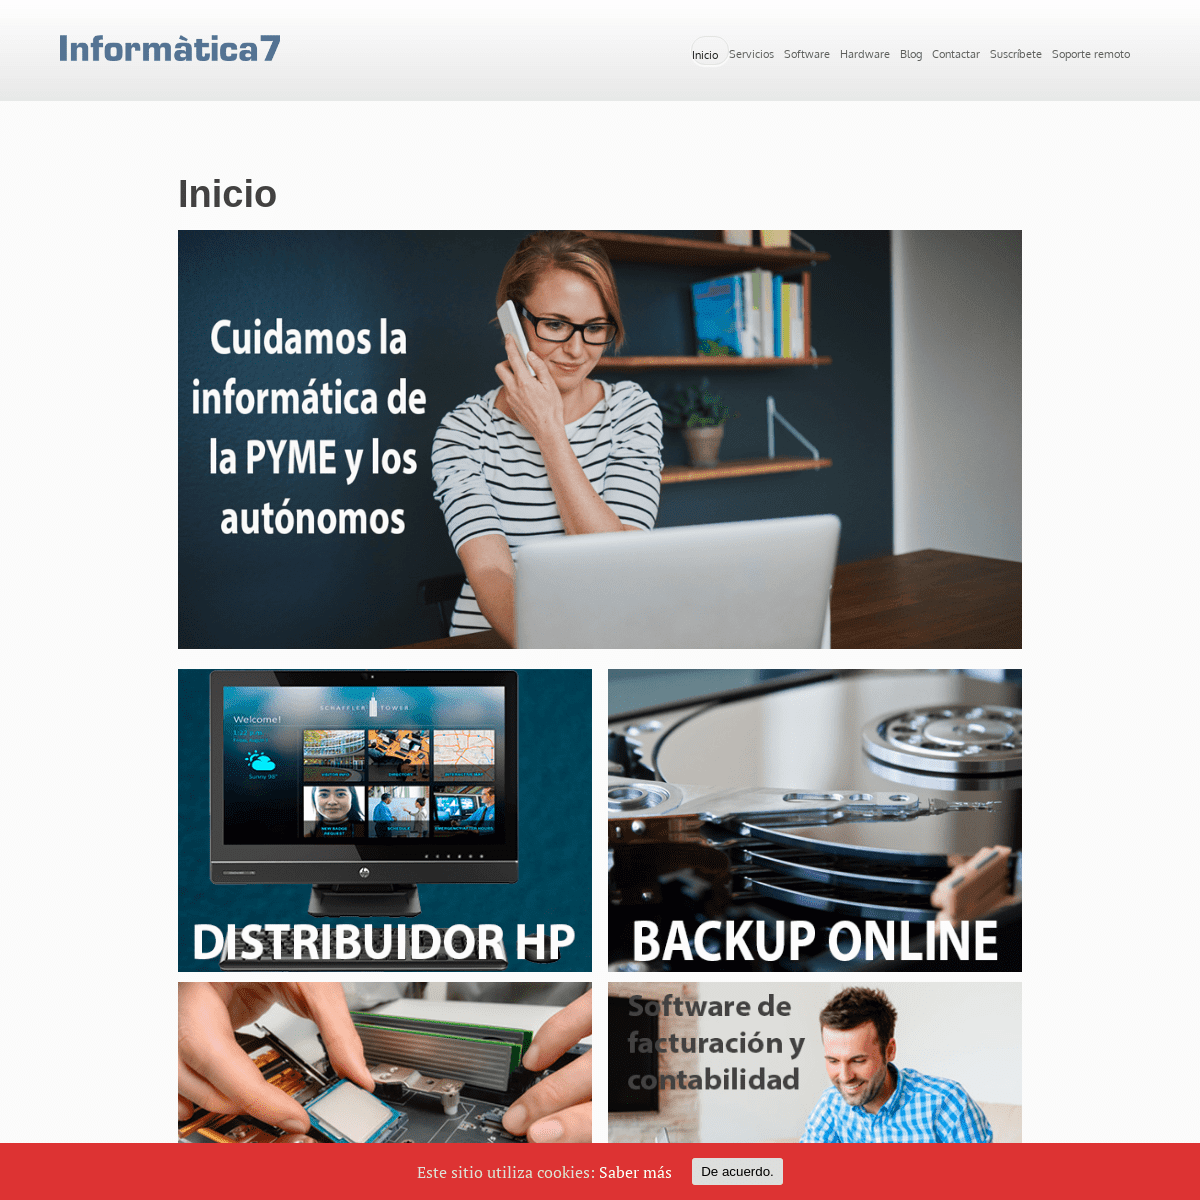 A complete backup of informatica7.com